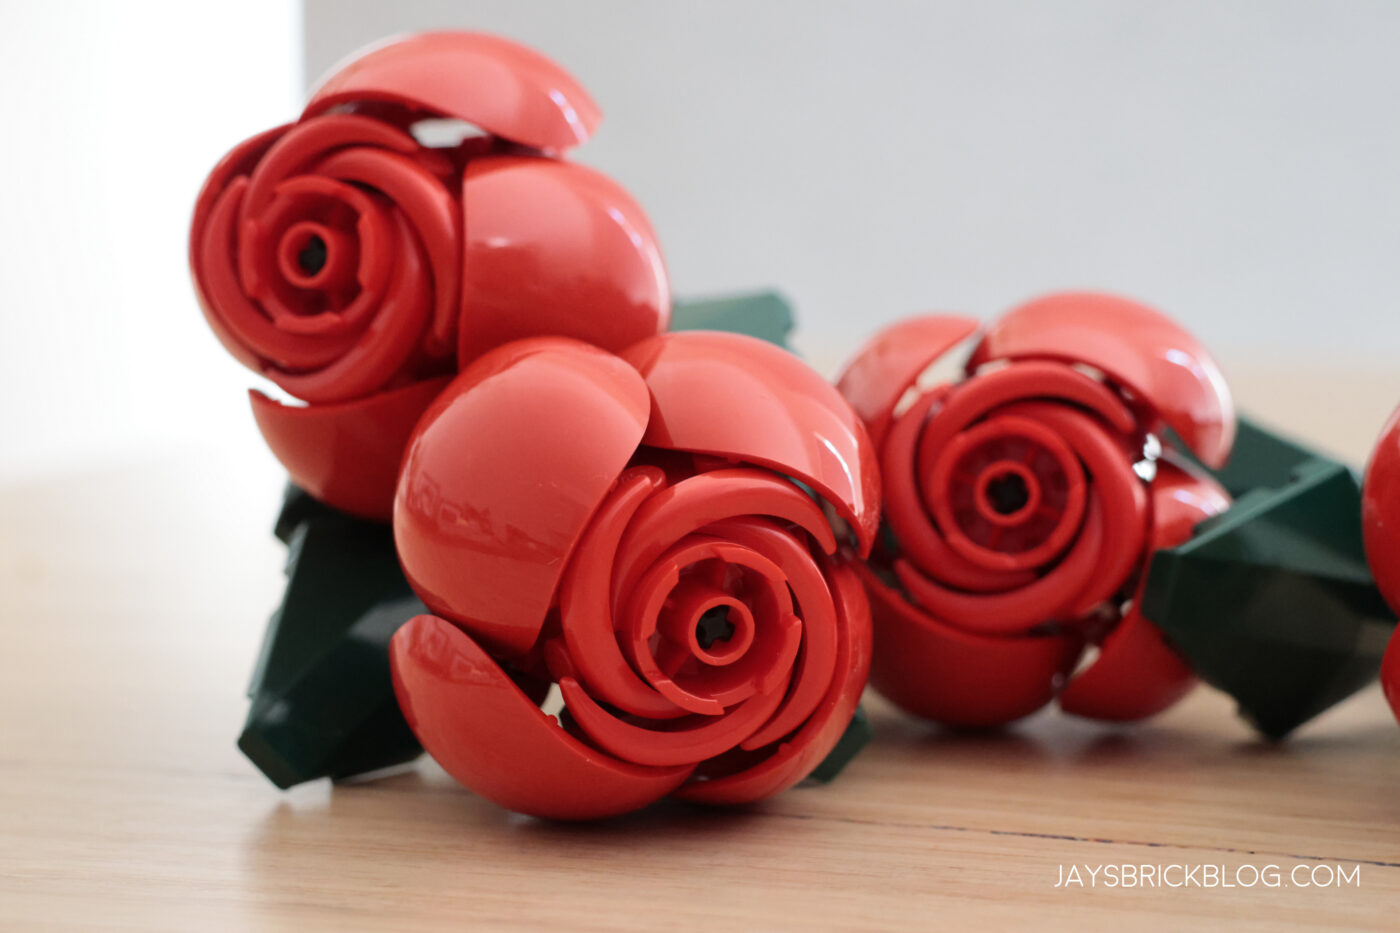 new lego flowers revealed! A dozen red roses 🌹 #lego #flowers #roses , Lego Flowers